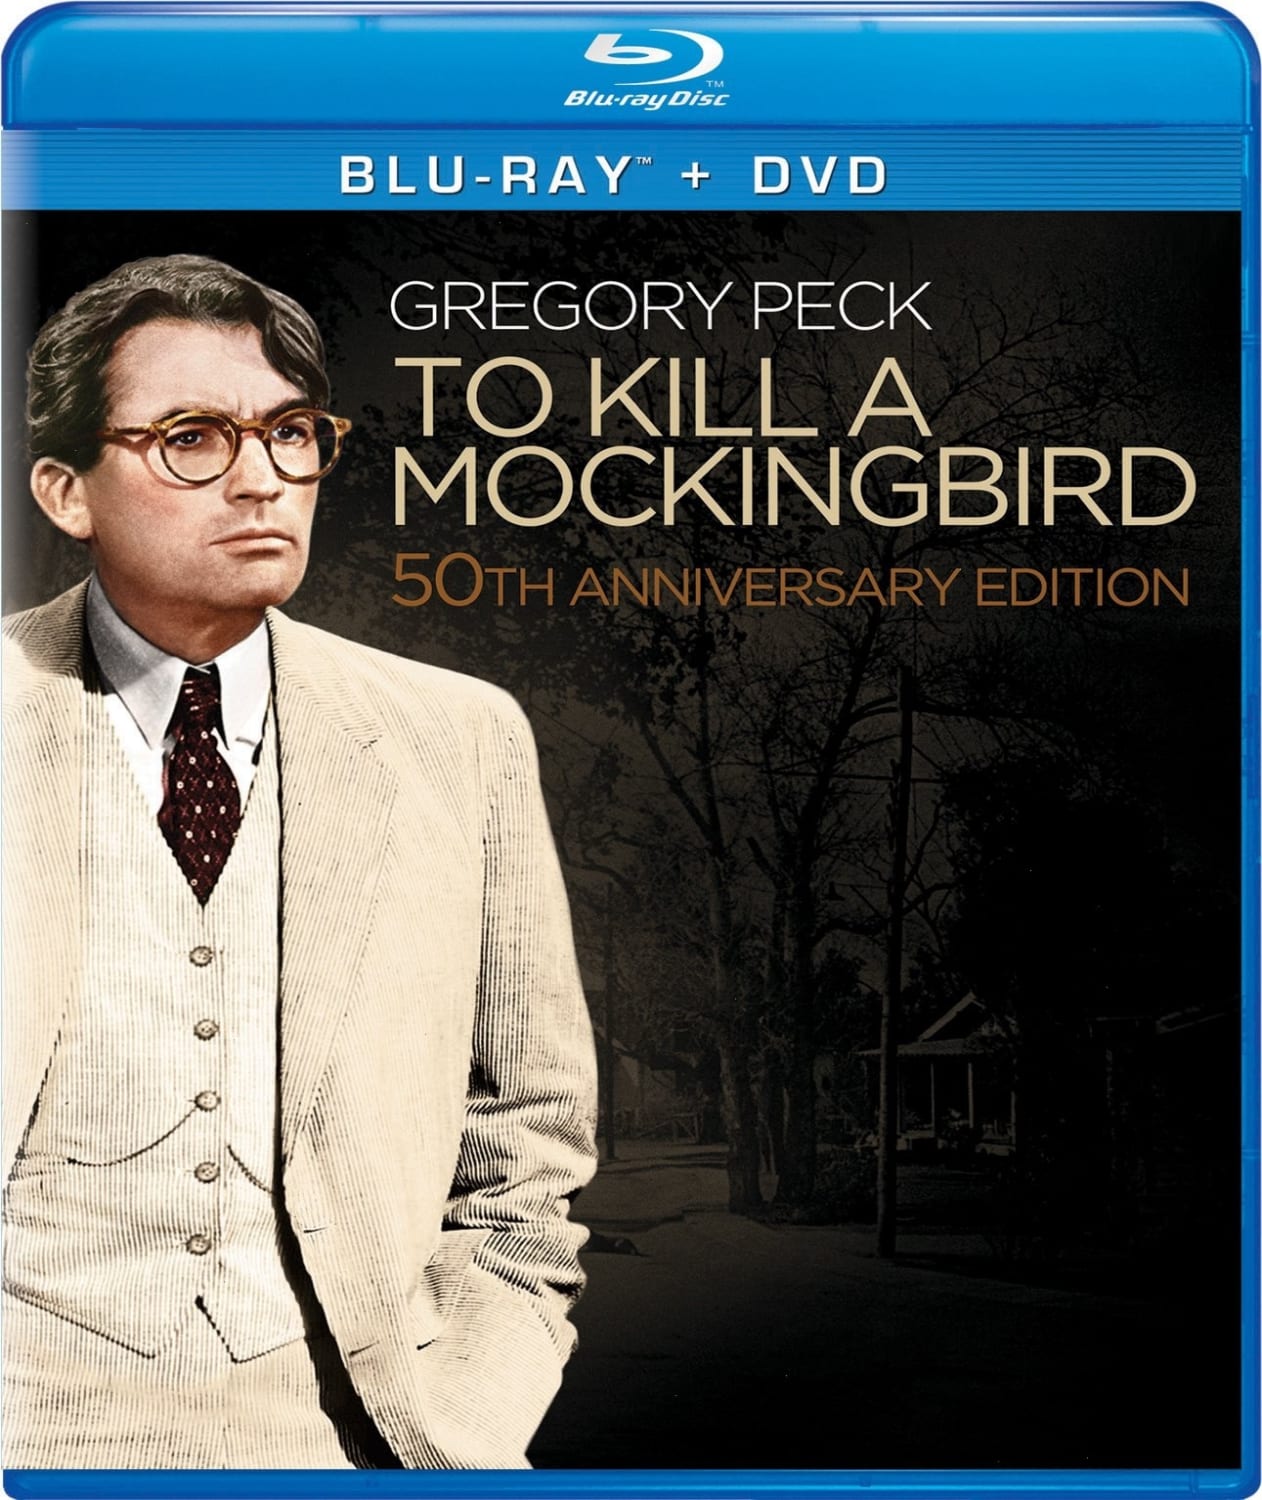 To Kill A Mockingbird (Blu-ray / DVD) on MovieShack